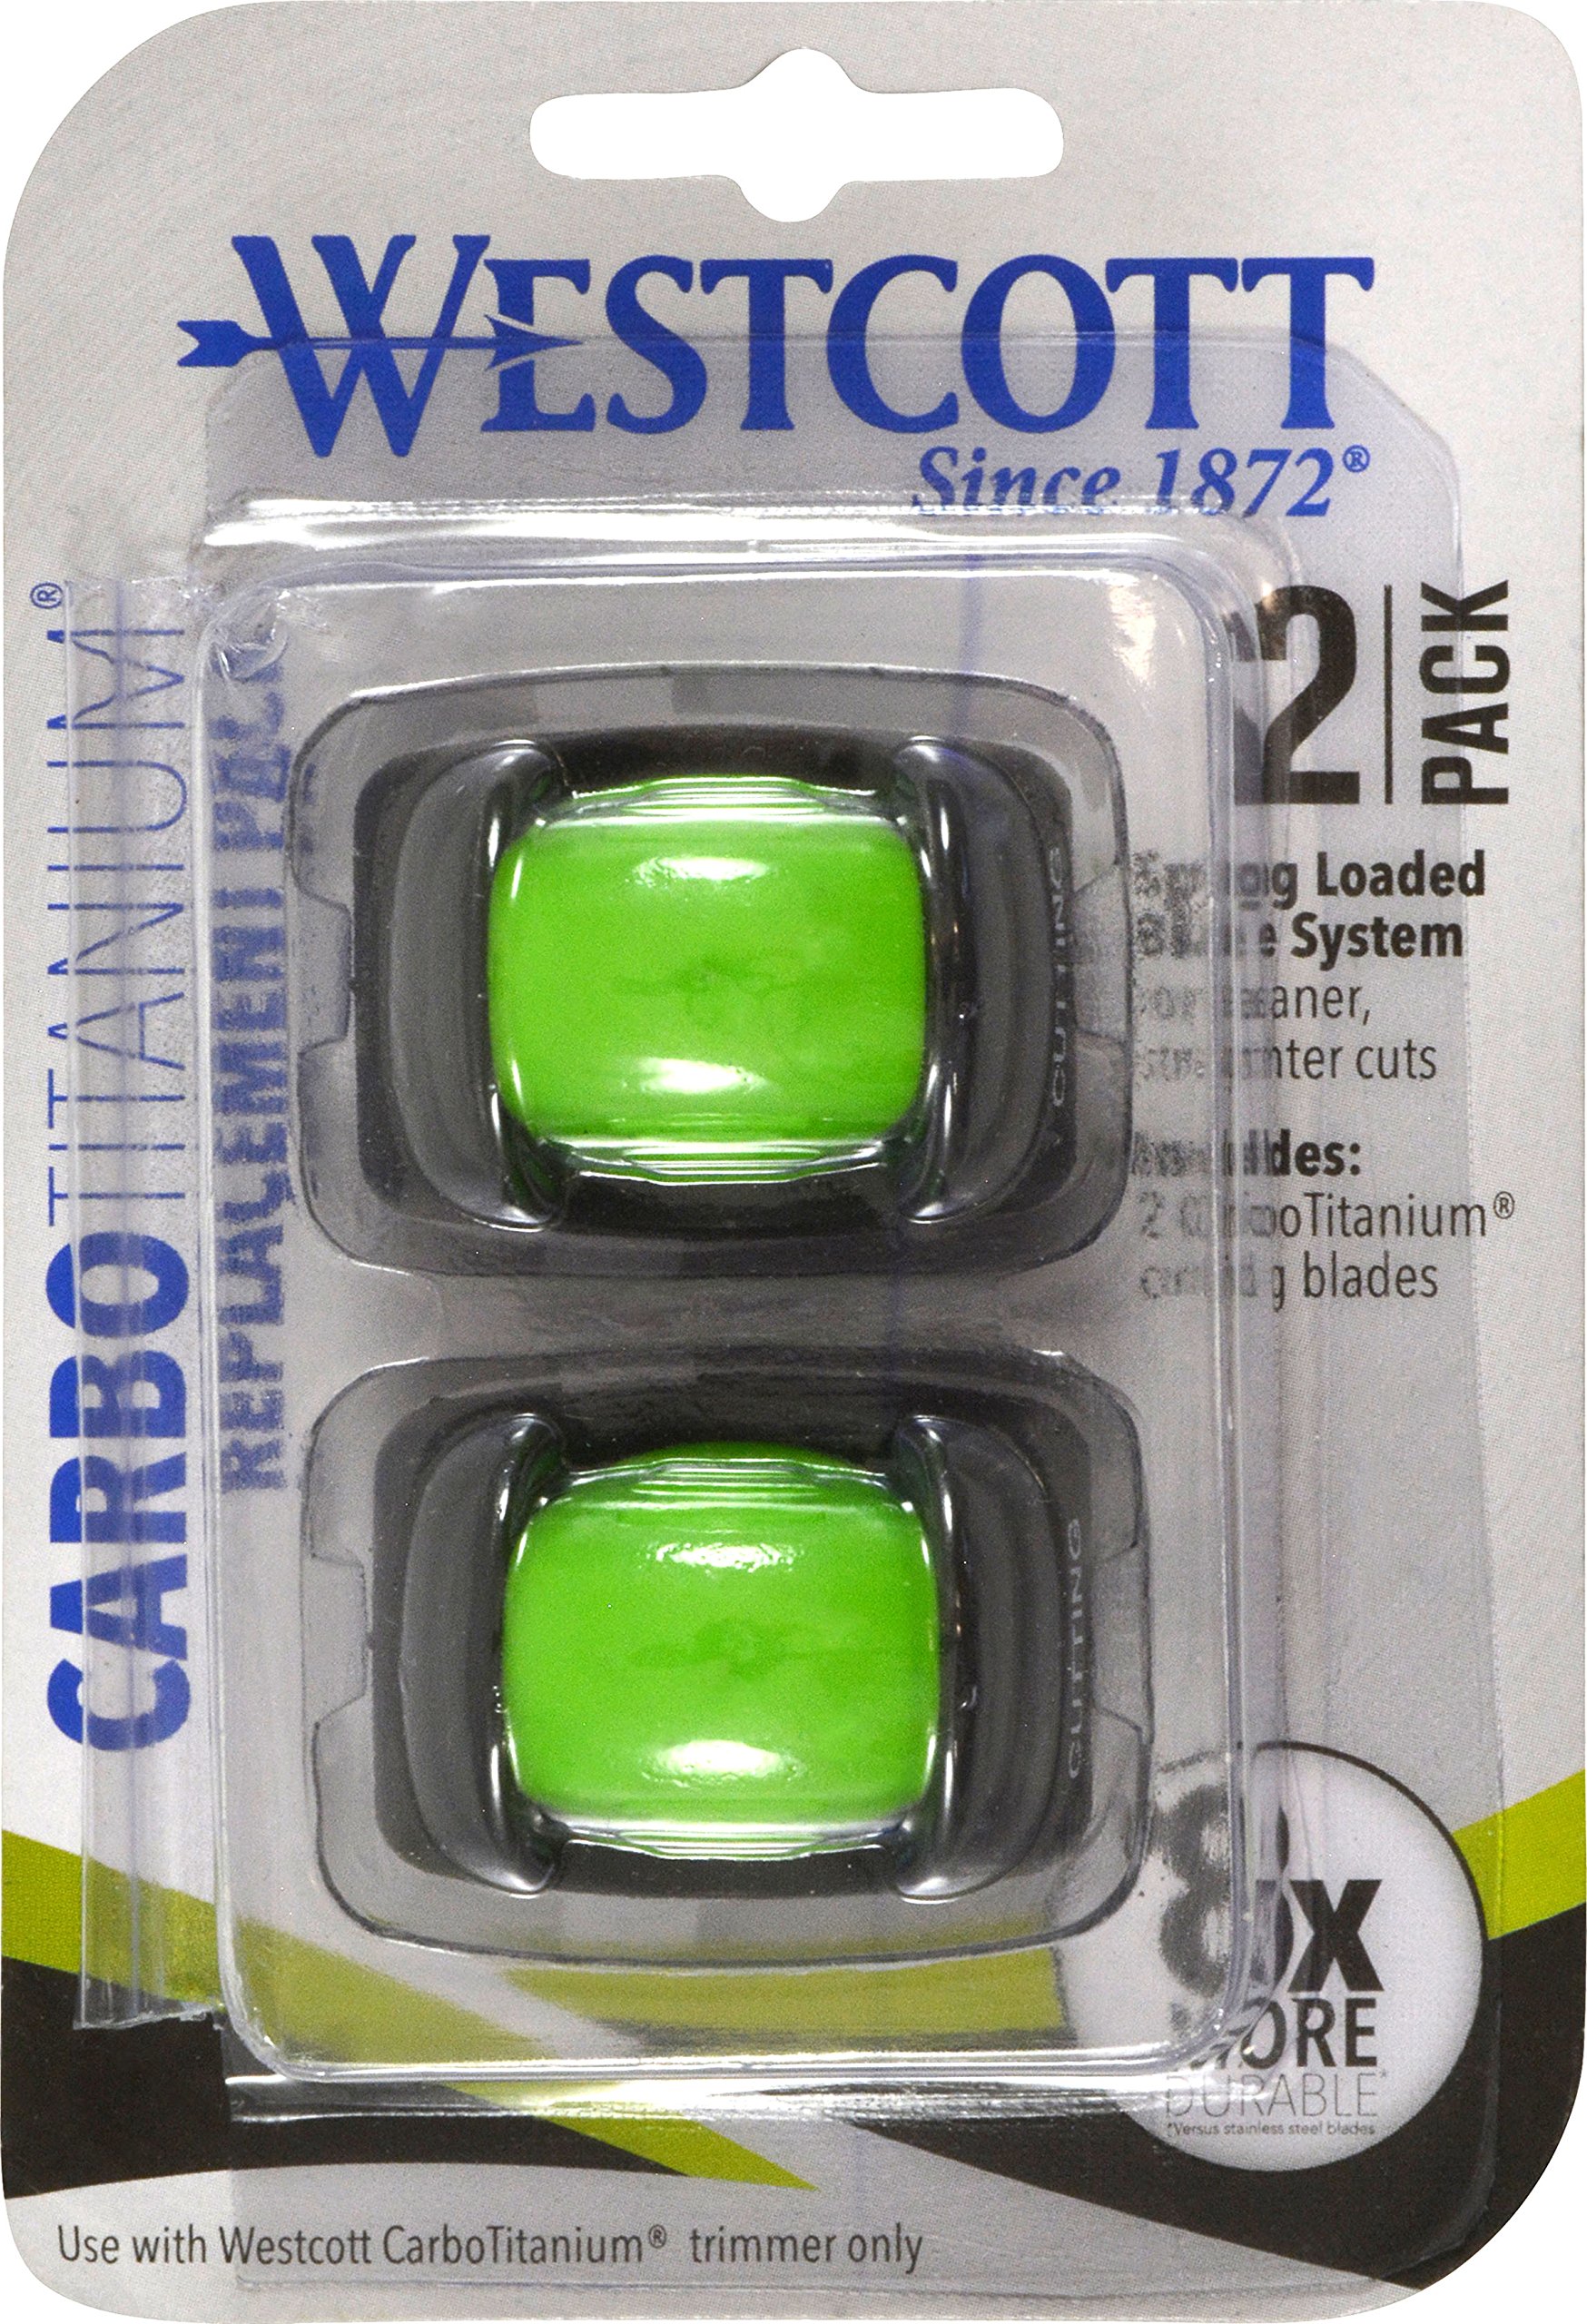 Westcott - Westcott Ceramic Dial Utility Cutter with One Blade